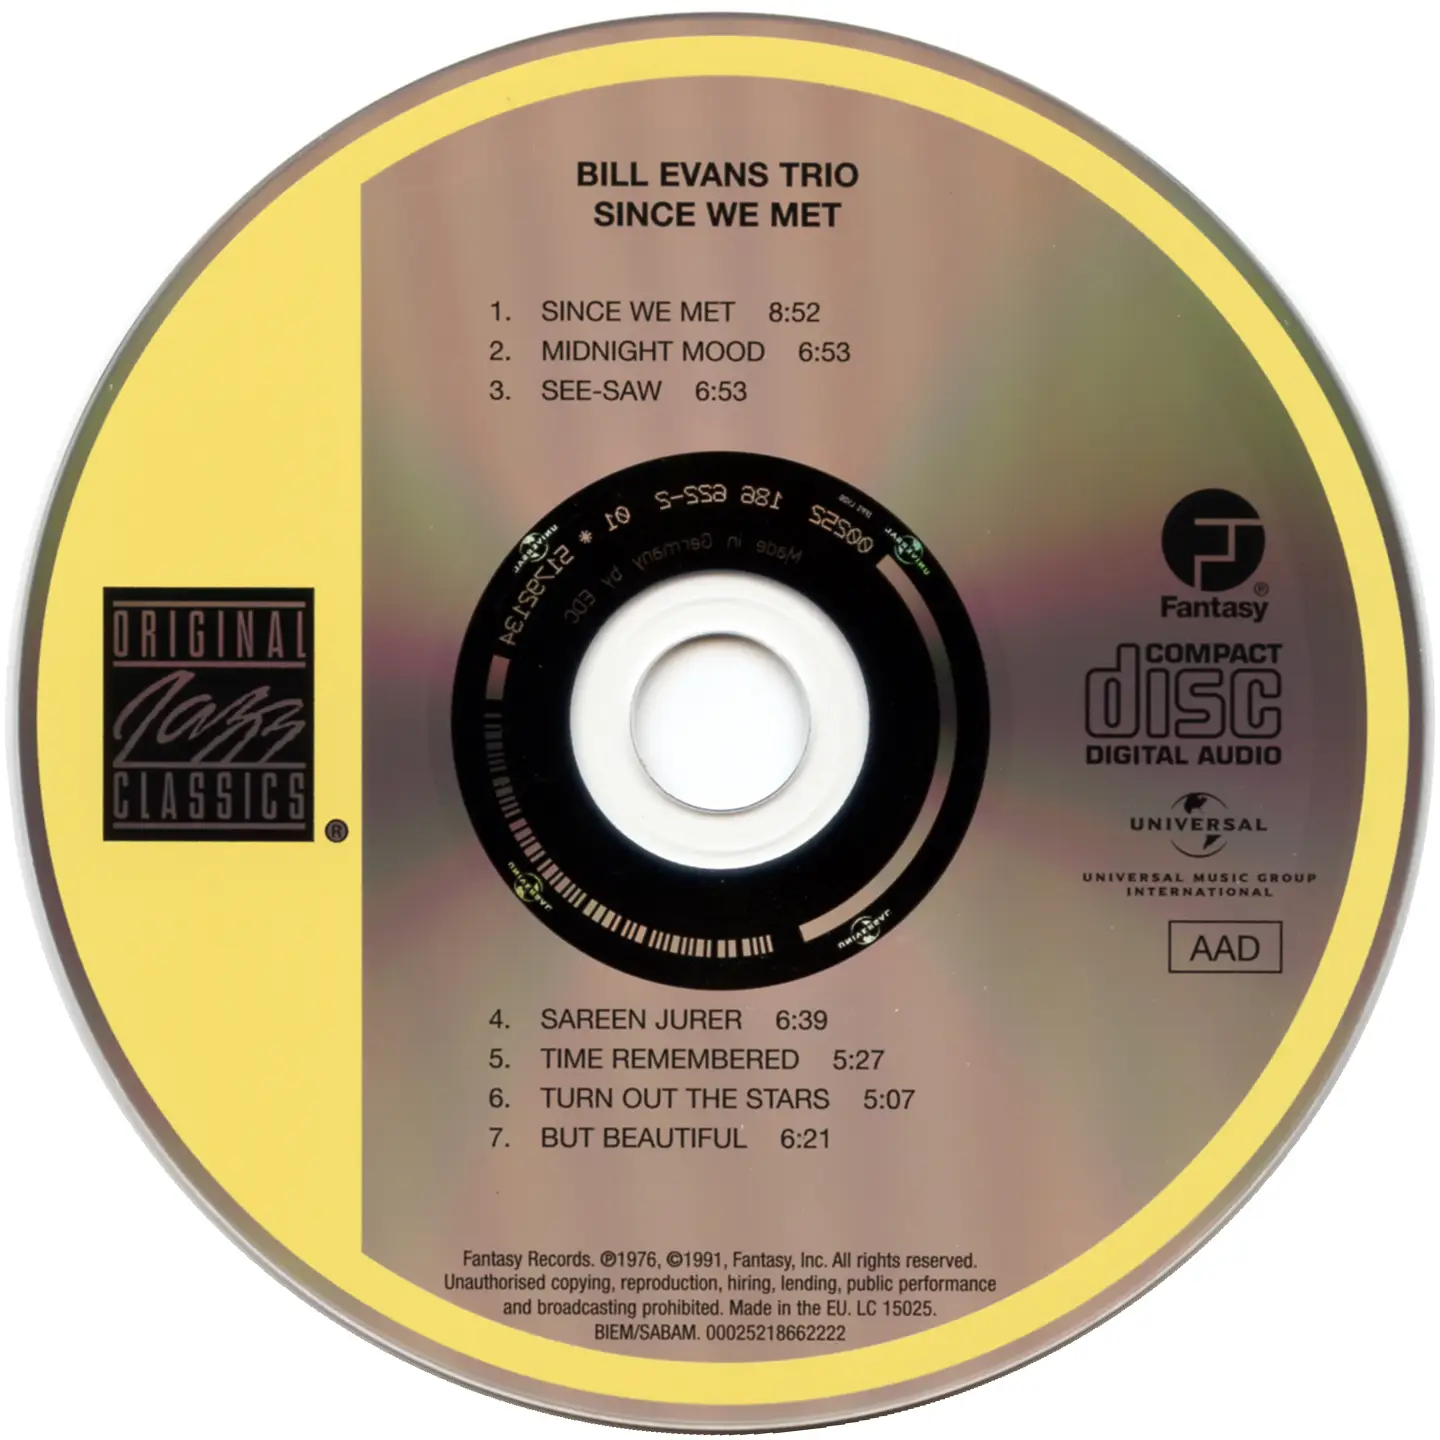 Bill Evans Trio - Since We Met (1974) [Remastered 1991] / AvaxHome